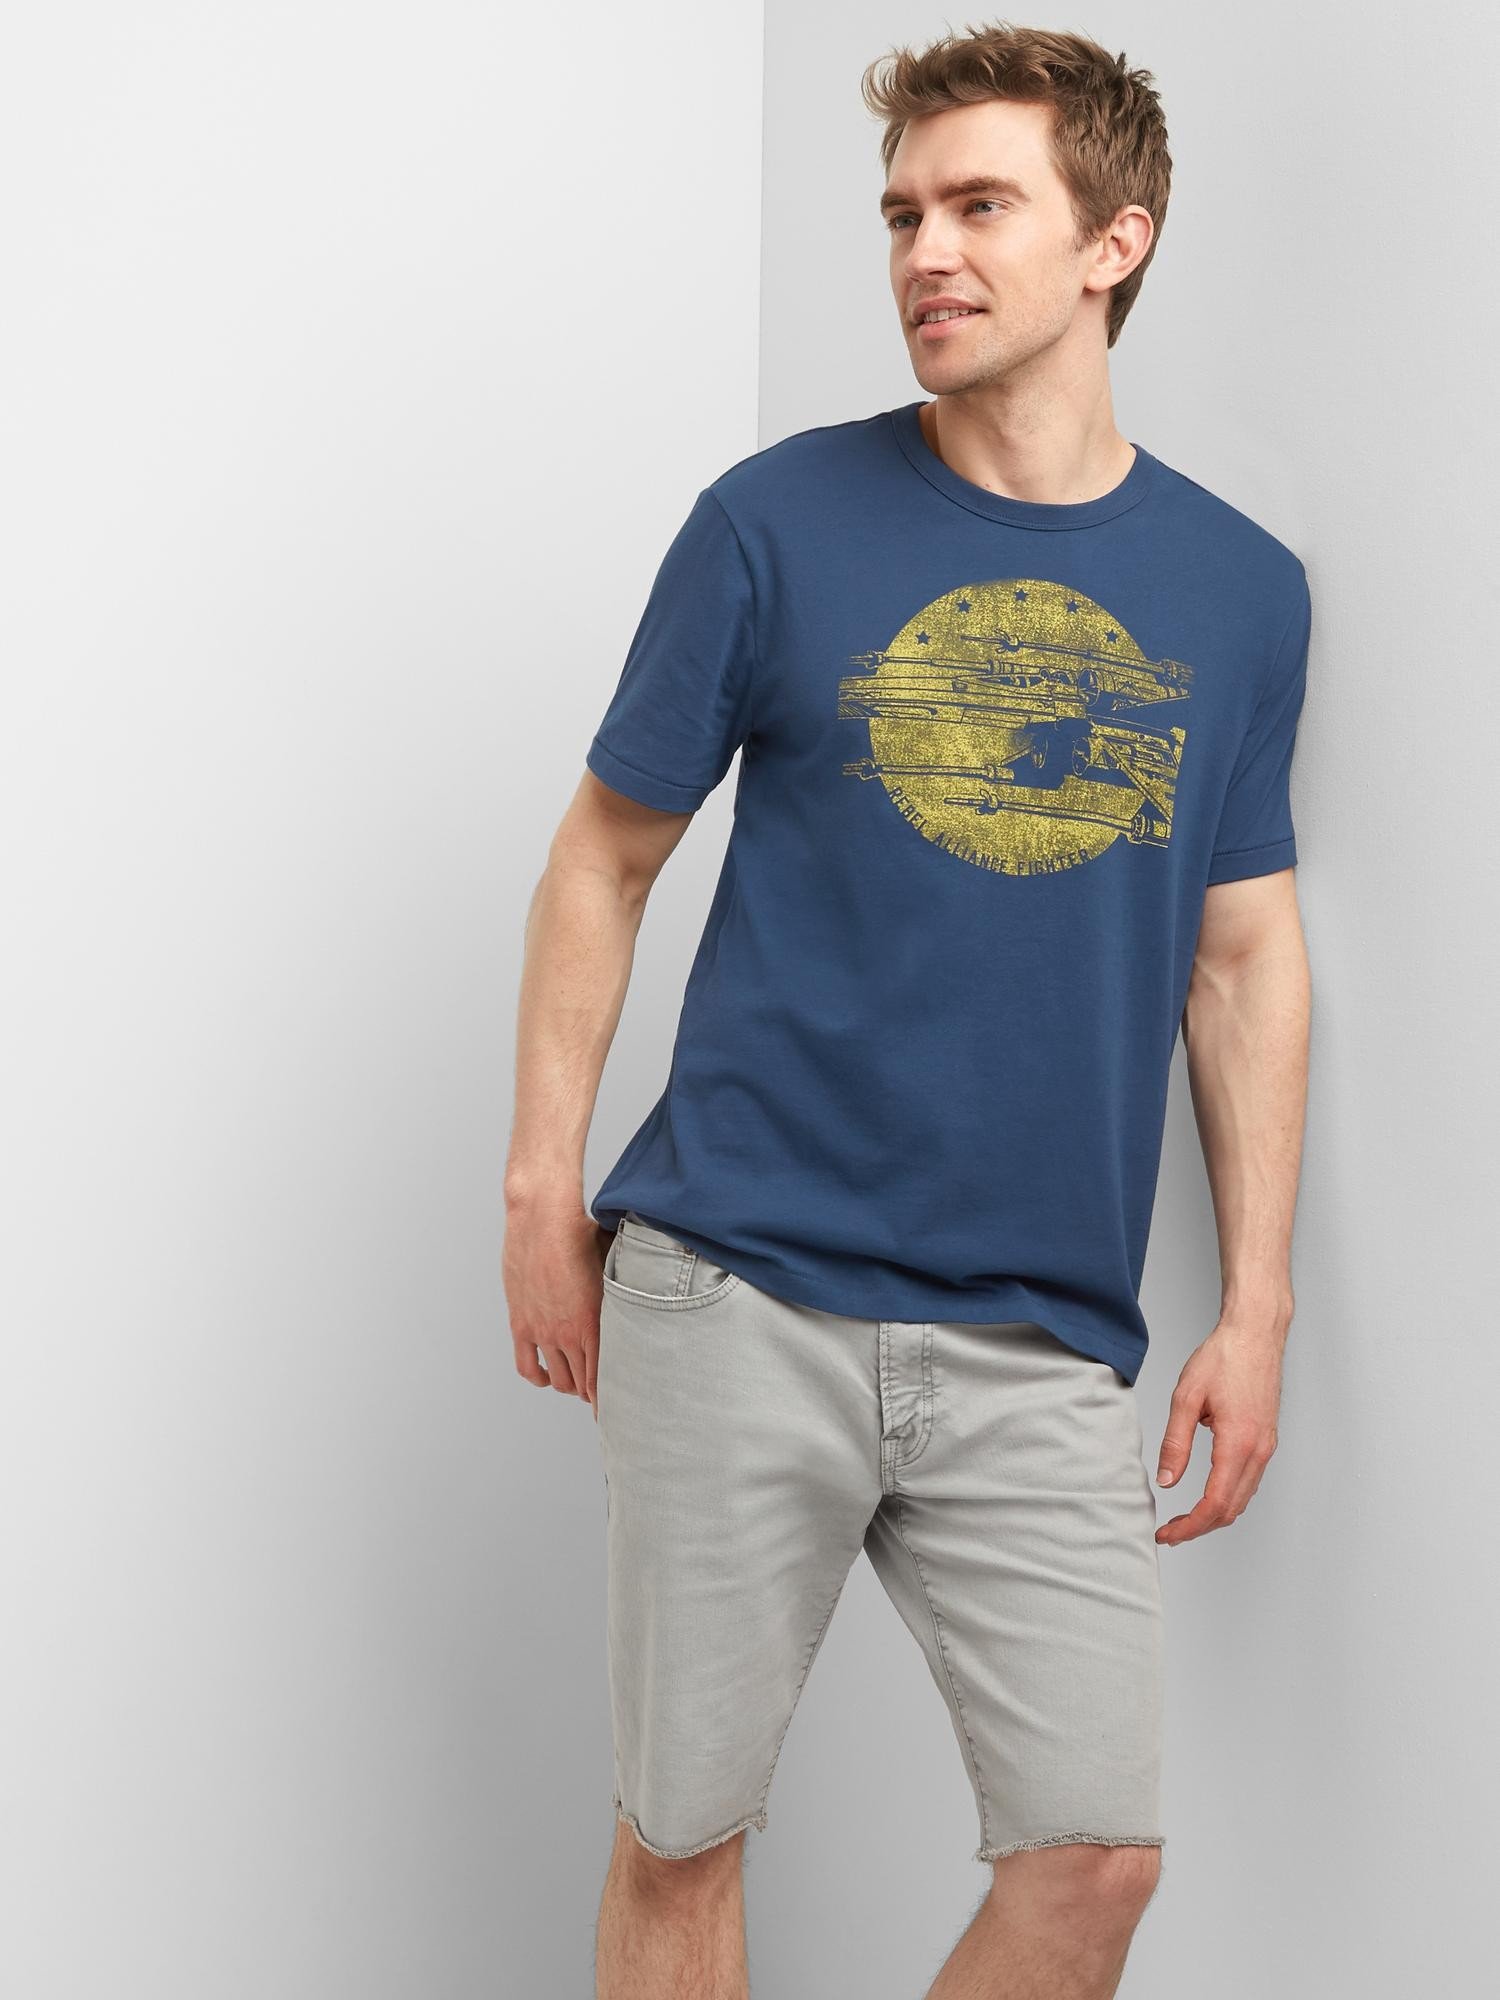 Gap | Star Wars:trade_mark: Rebel Alliance t-shirt product image